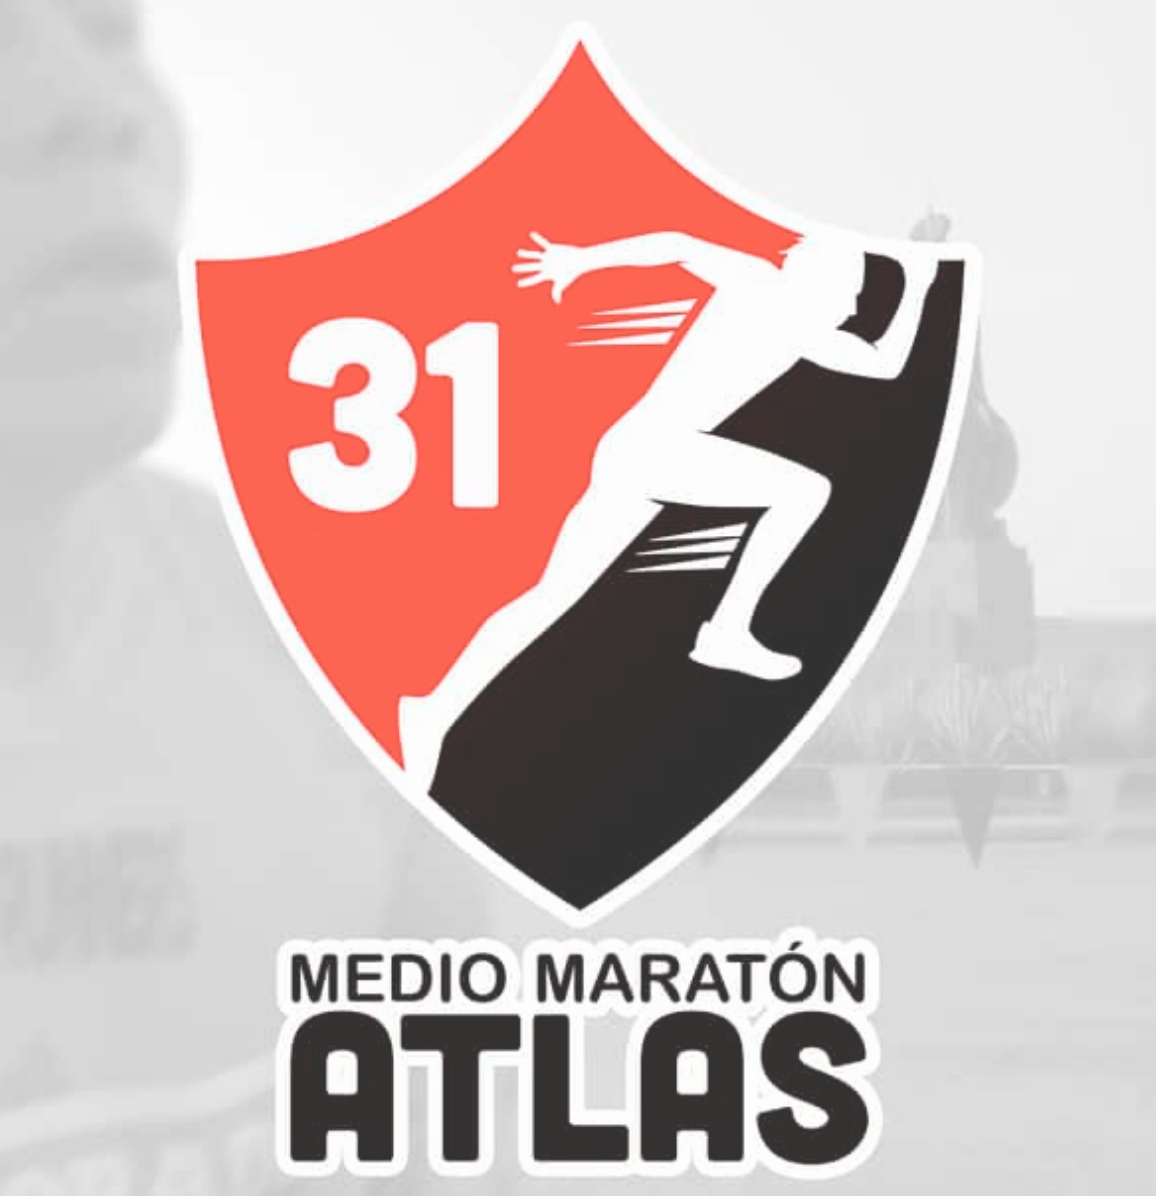 Atlas Half Marathon logo on RaceRaves